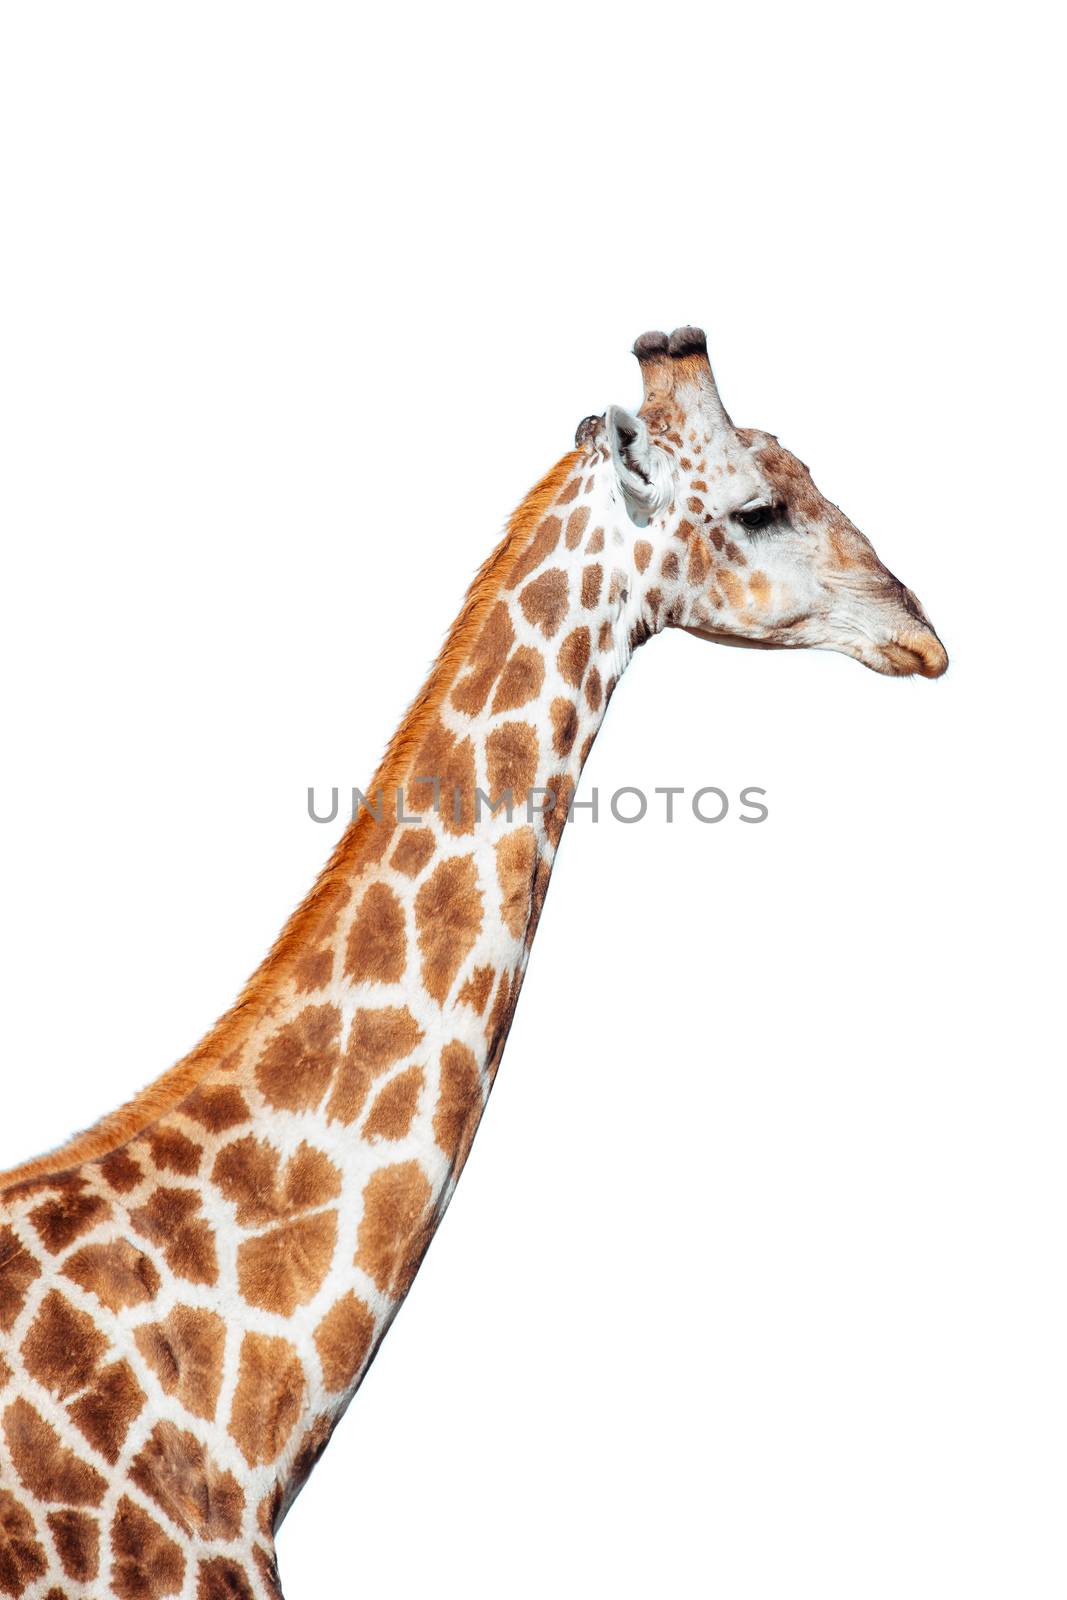 Giraffe isolated on white background by artush